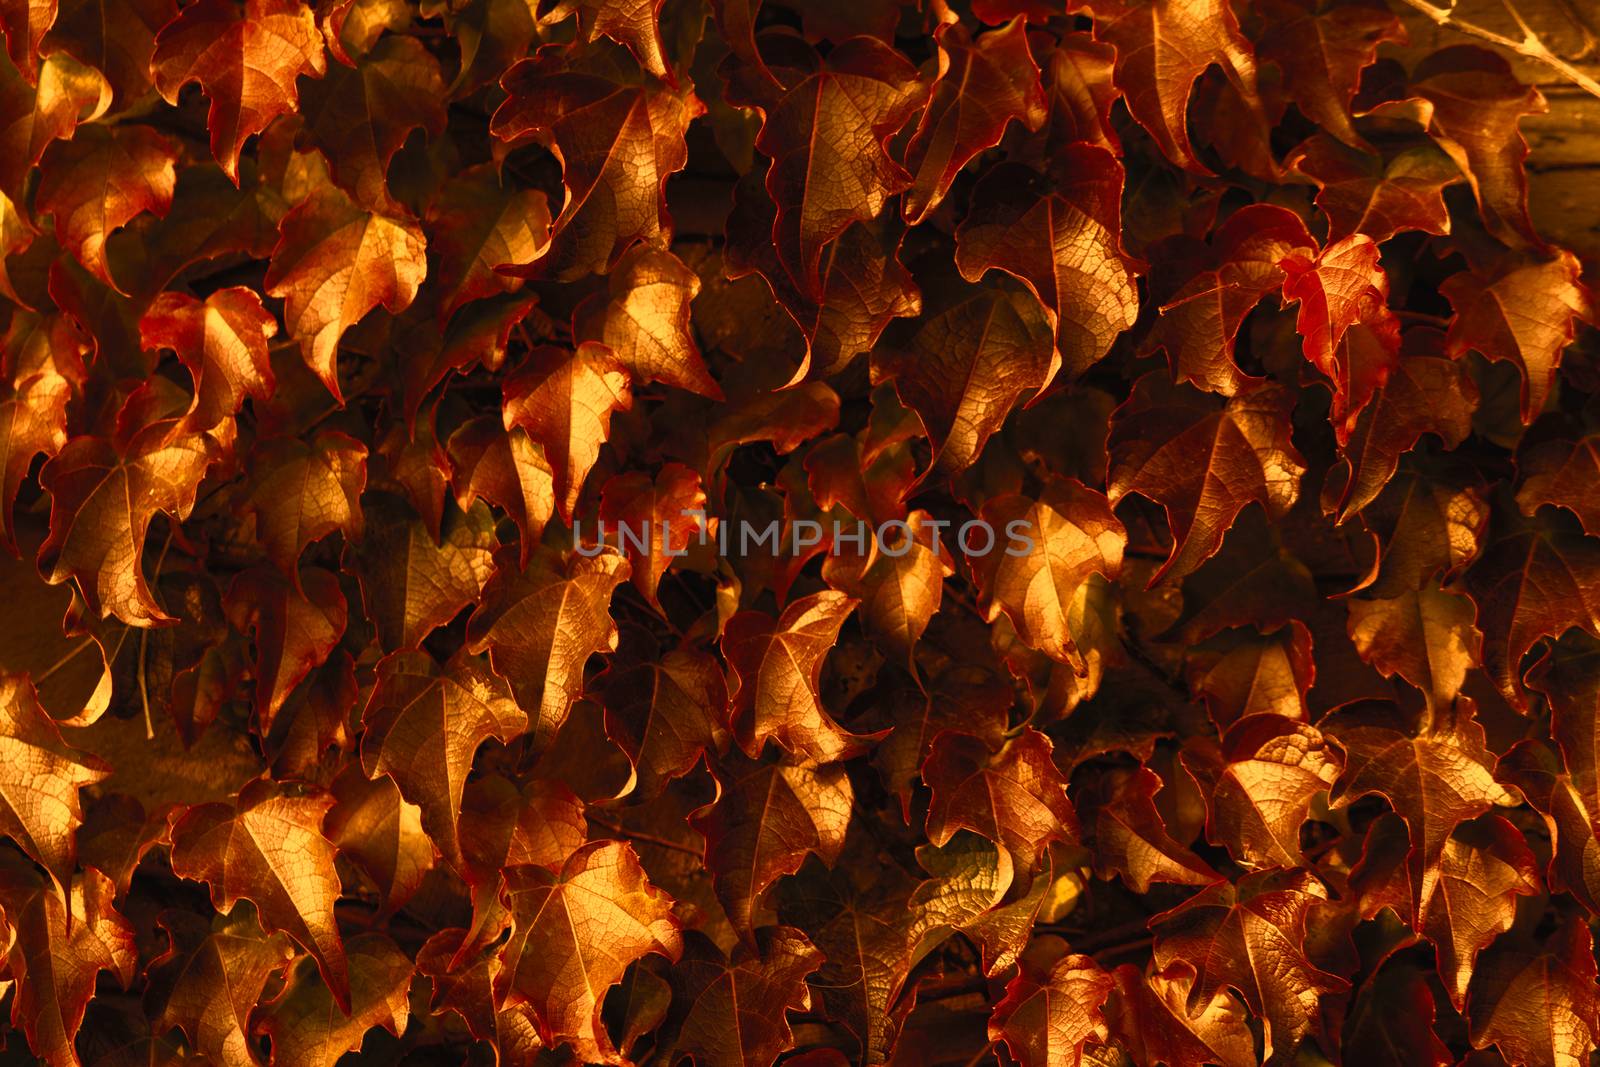 Creeping leaves by Nneirda